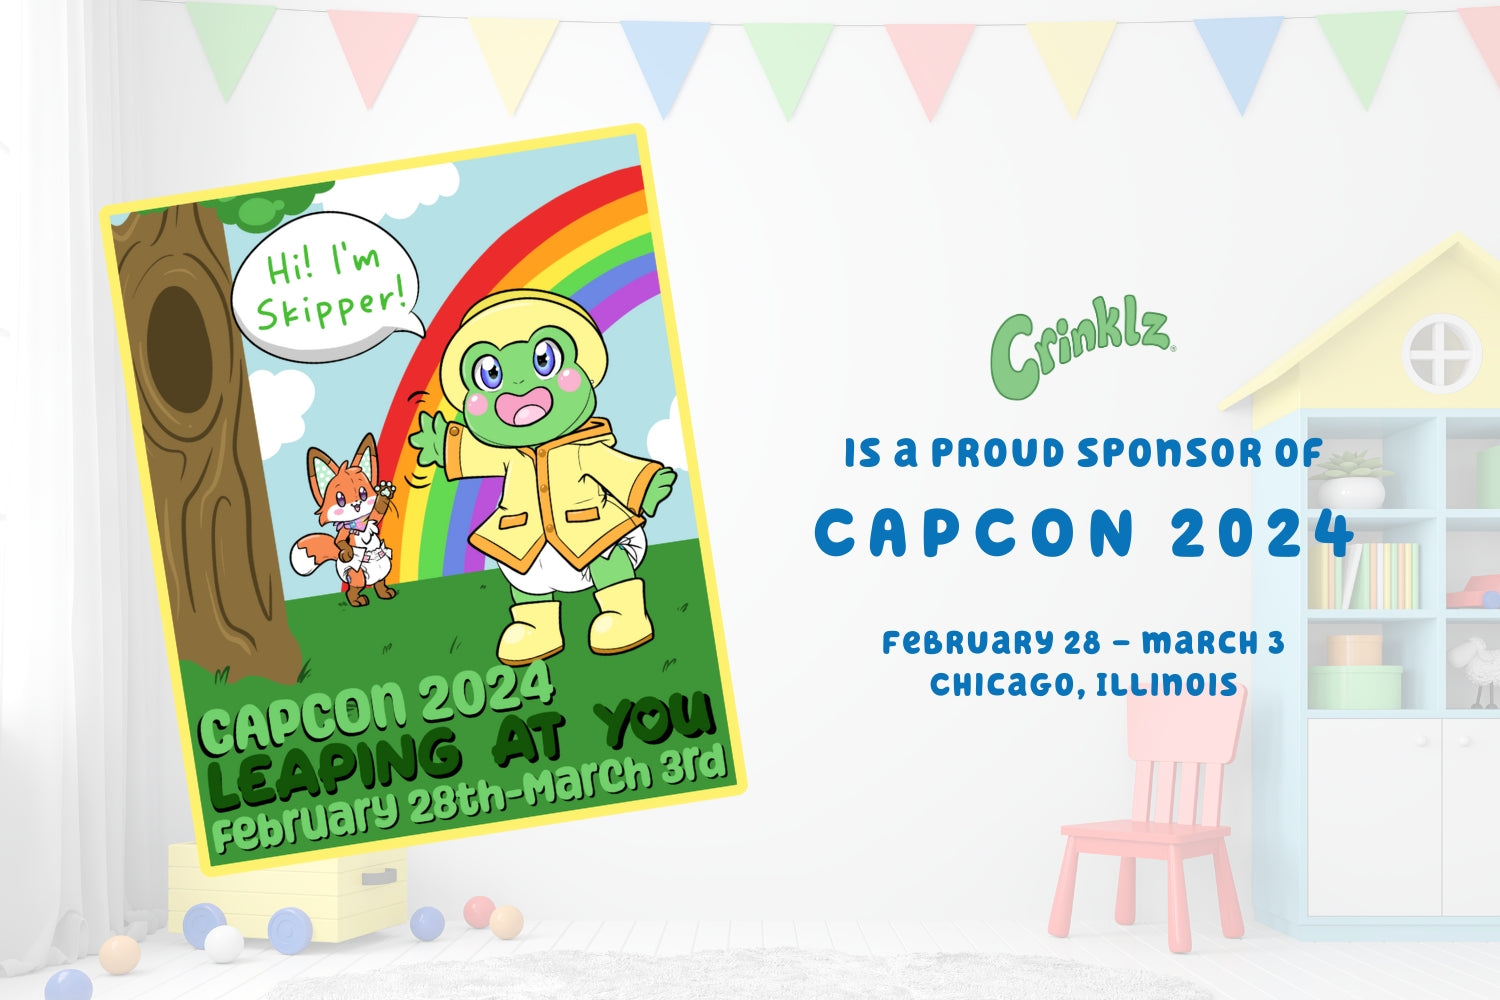 Crinklz is sponsoring CAPCon 2024